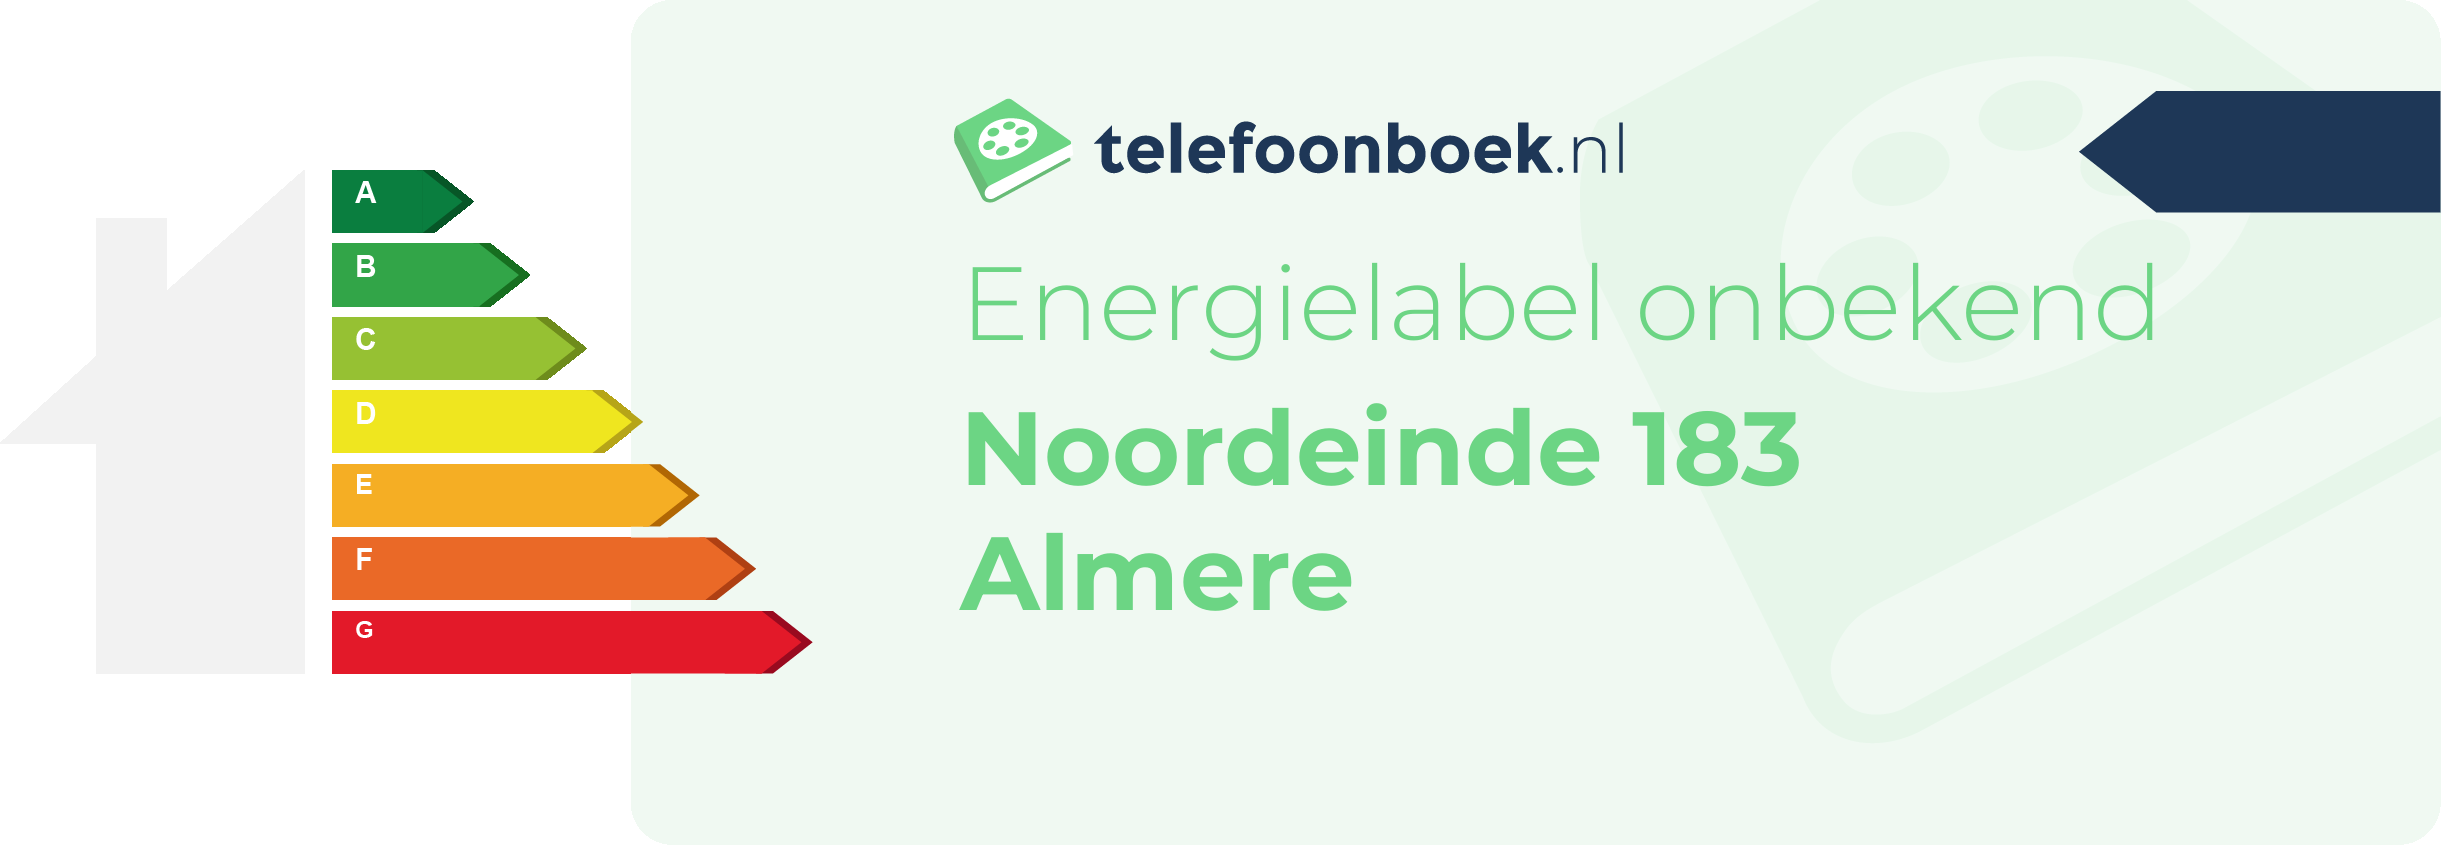 Energielabel Noordeinde 183 Almere